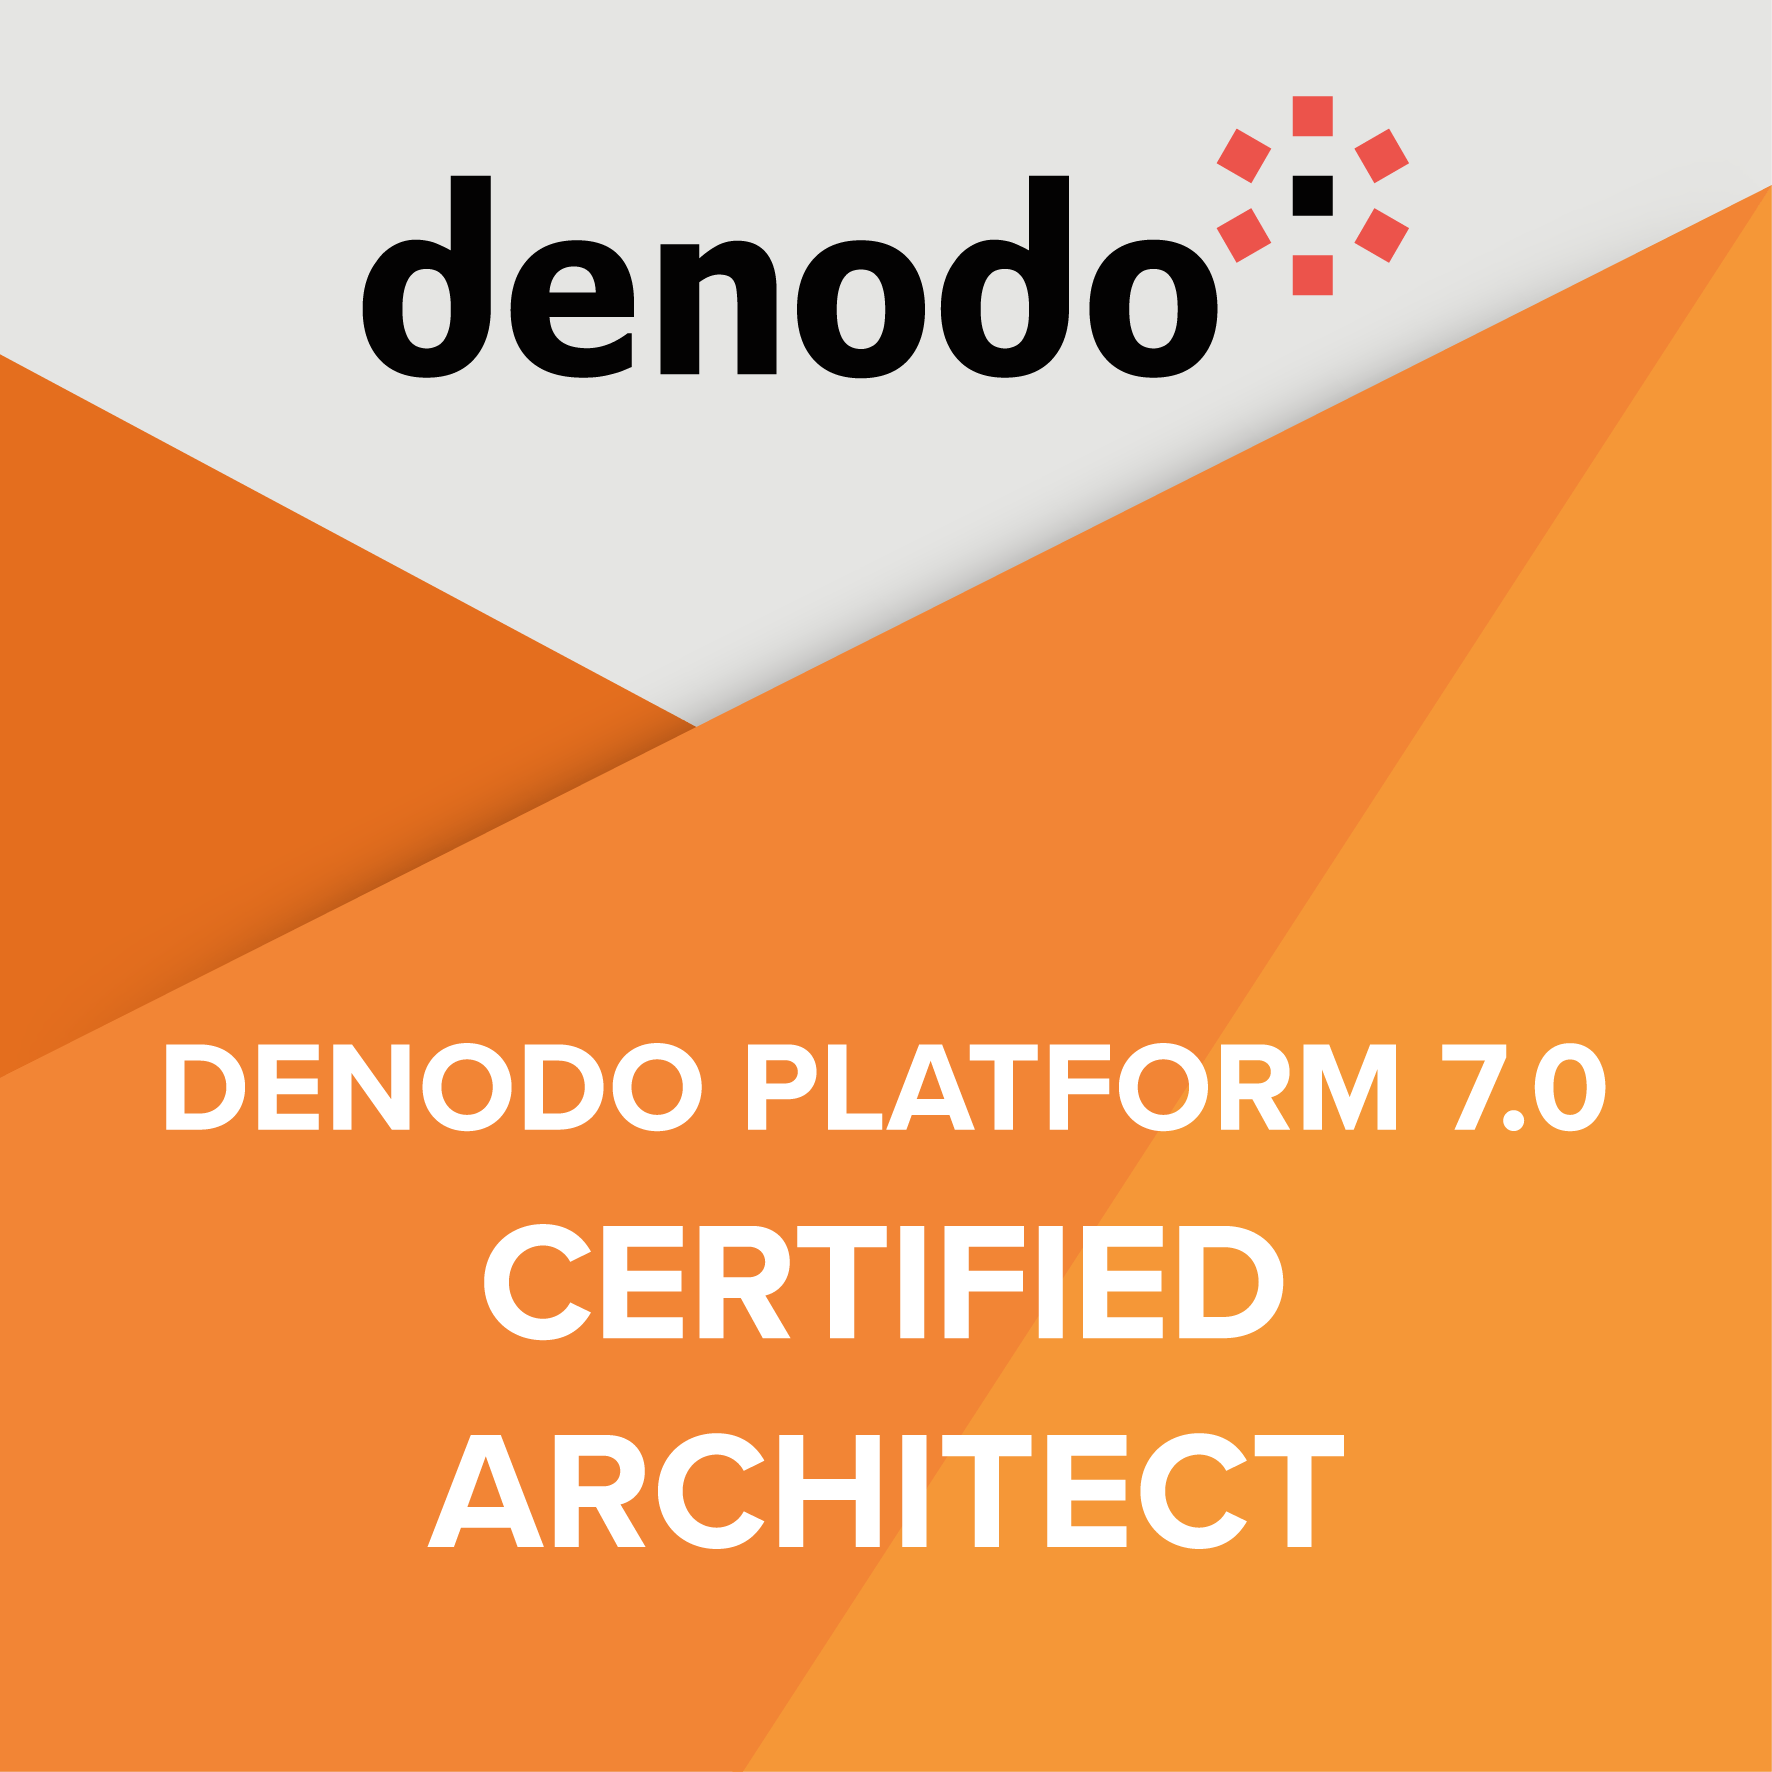 Denodo Logo - Denodo Badge Usage Guidelines